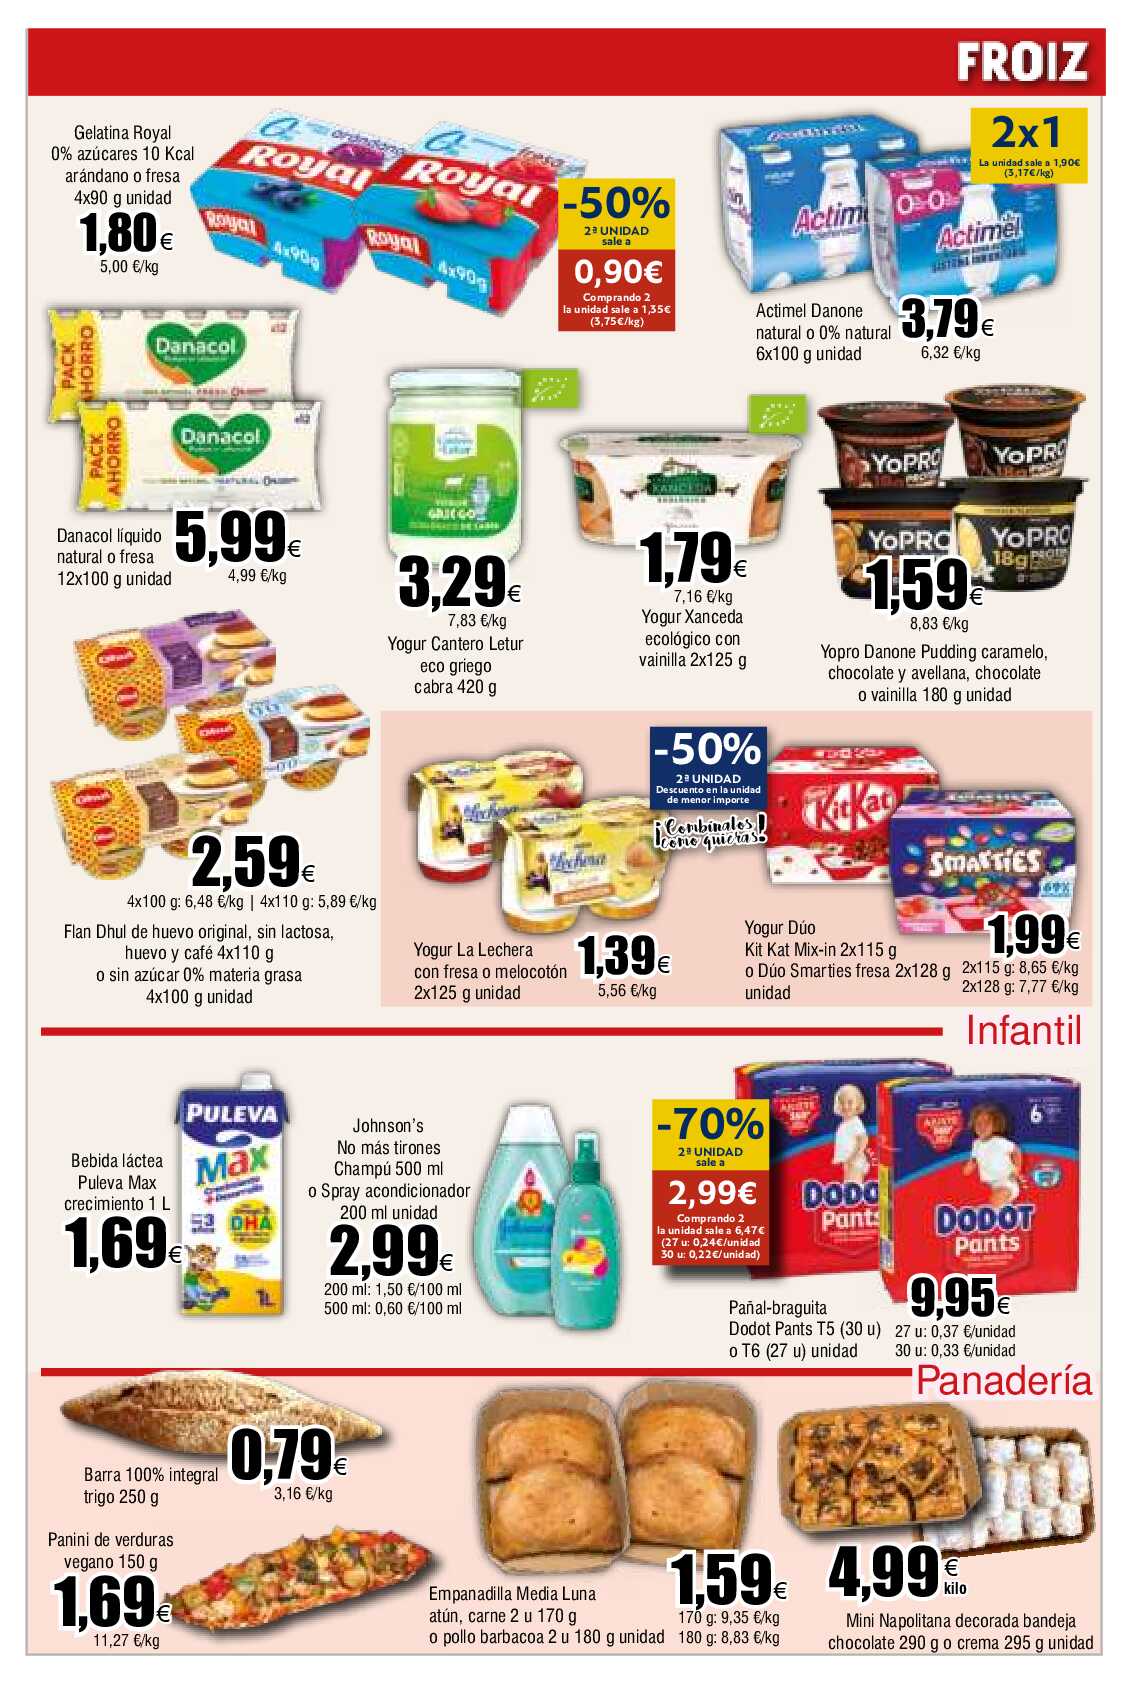 Ofertas supermercado Froiz. Página 09